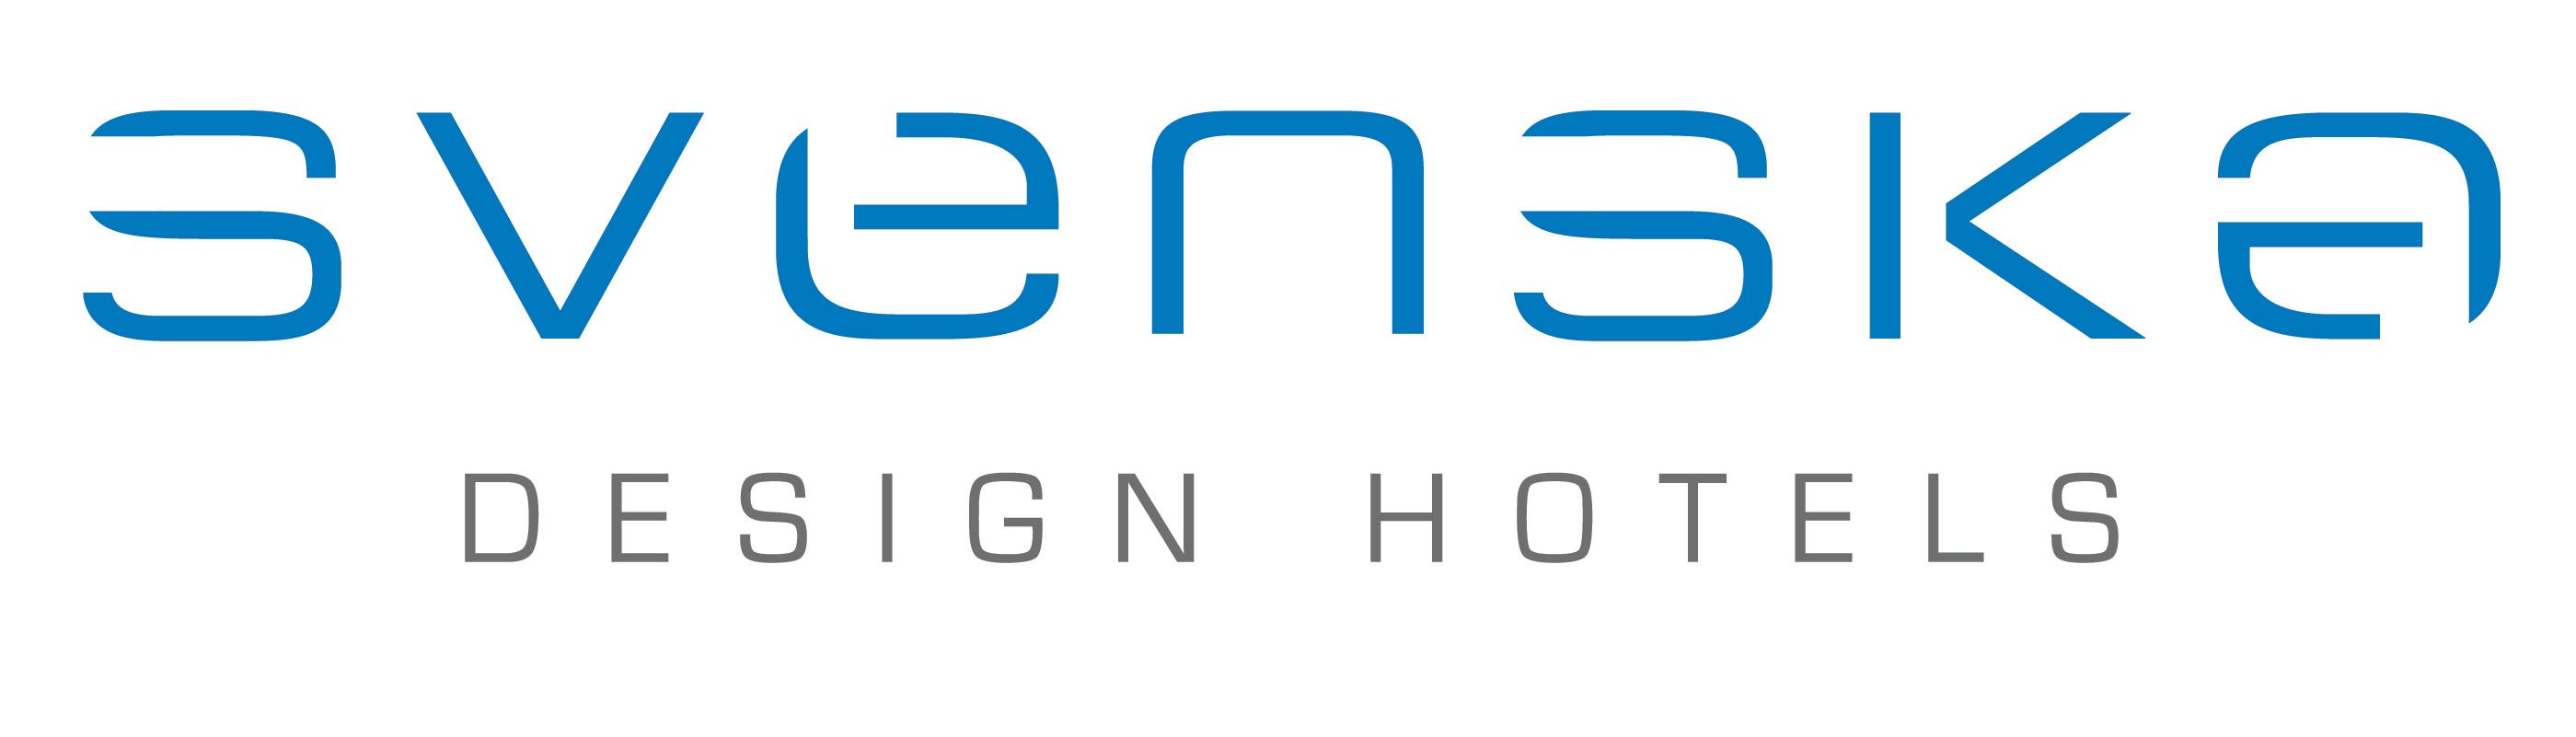 European Hotels Logo - Svenska Design Hotels, 5 star Luxury Boutique Hotels